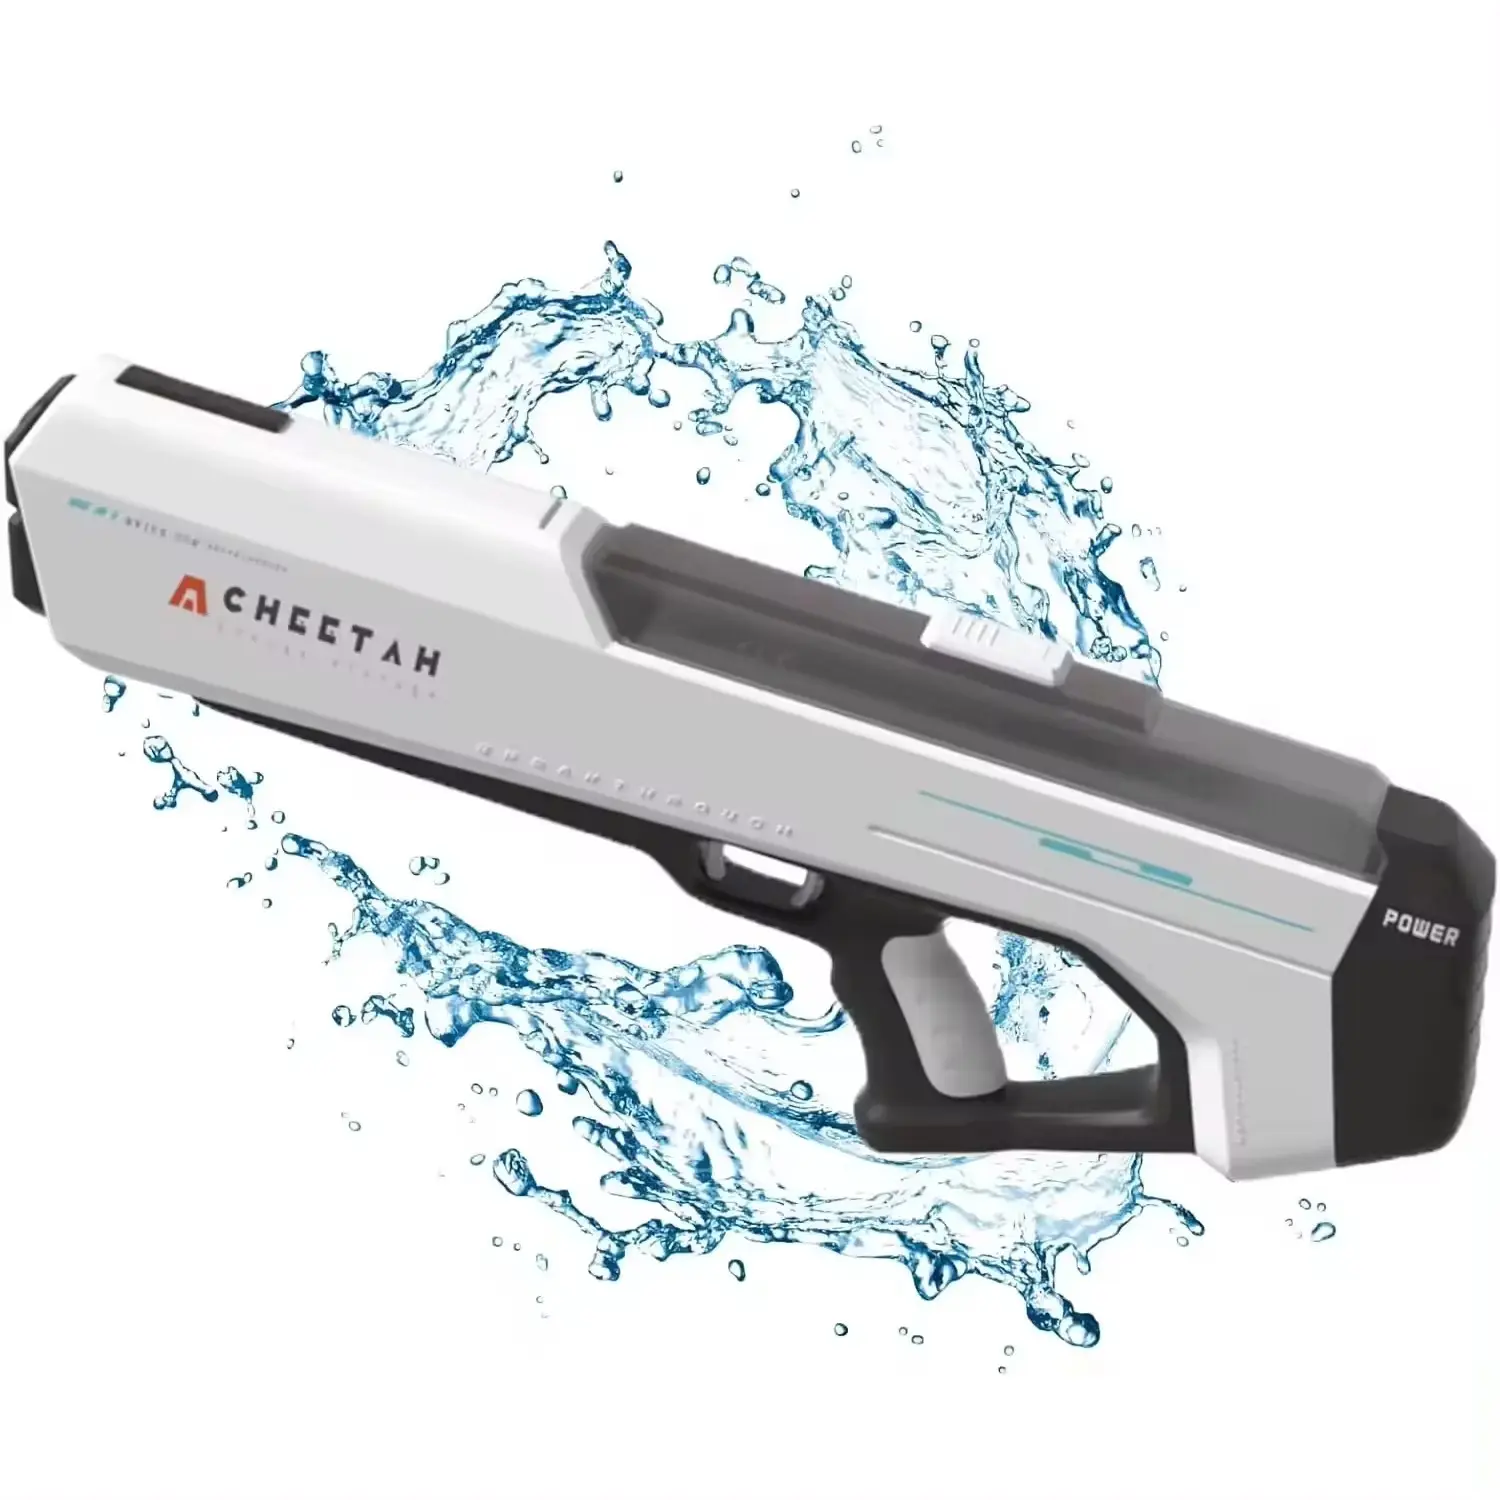 Hot Selling Electric Water Gun toy for adults 32 FT Shooting Range super soaker water guns big Capacity